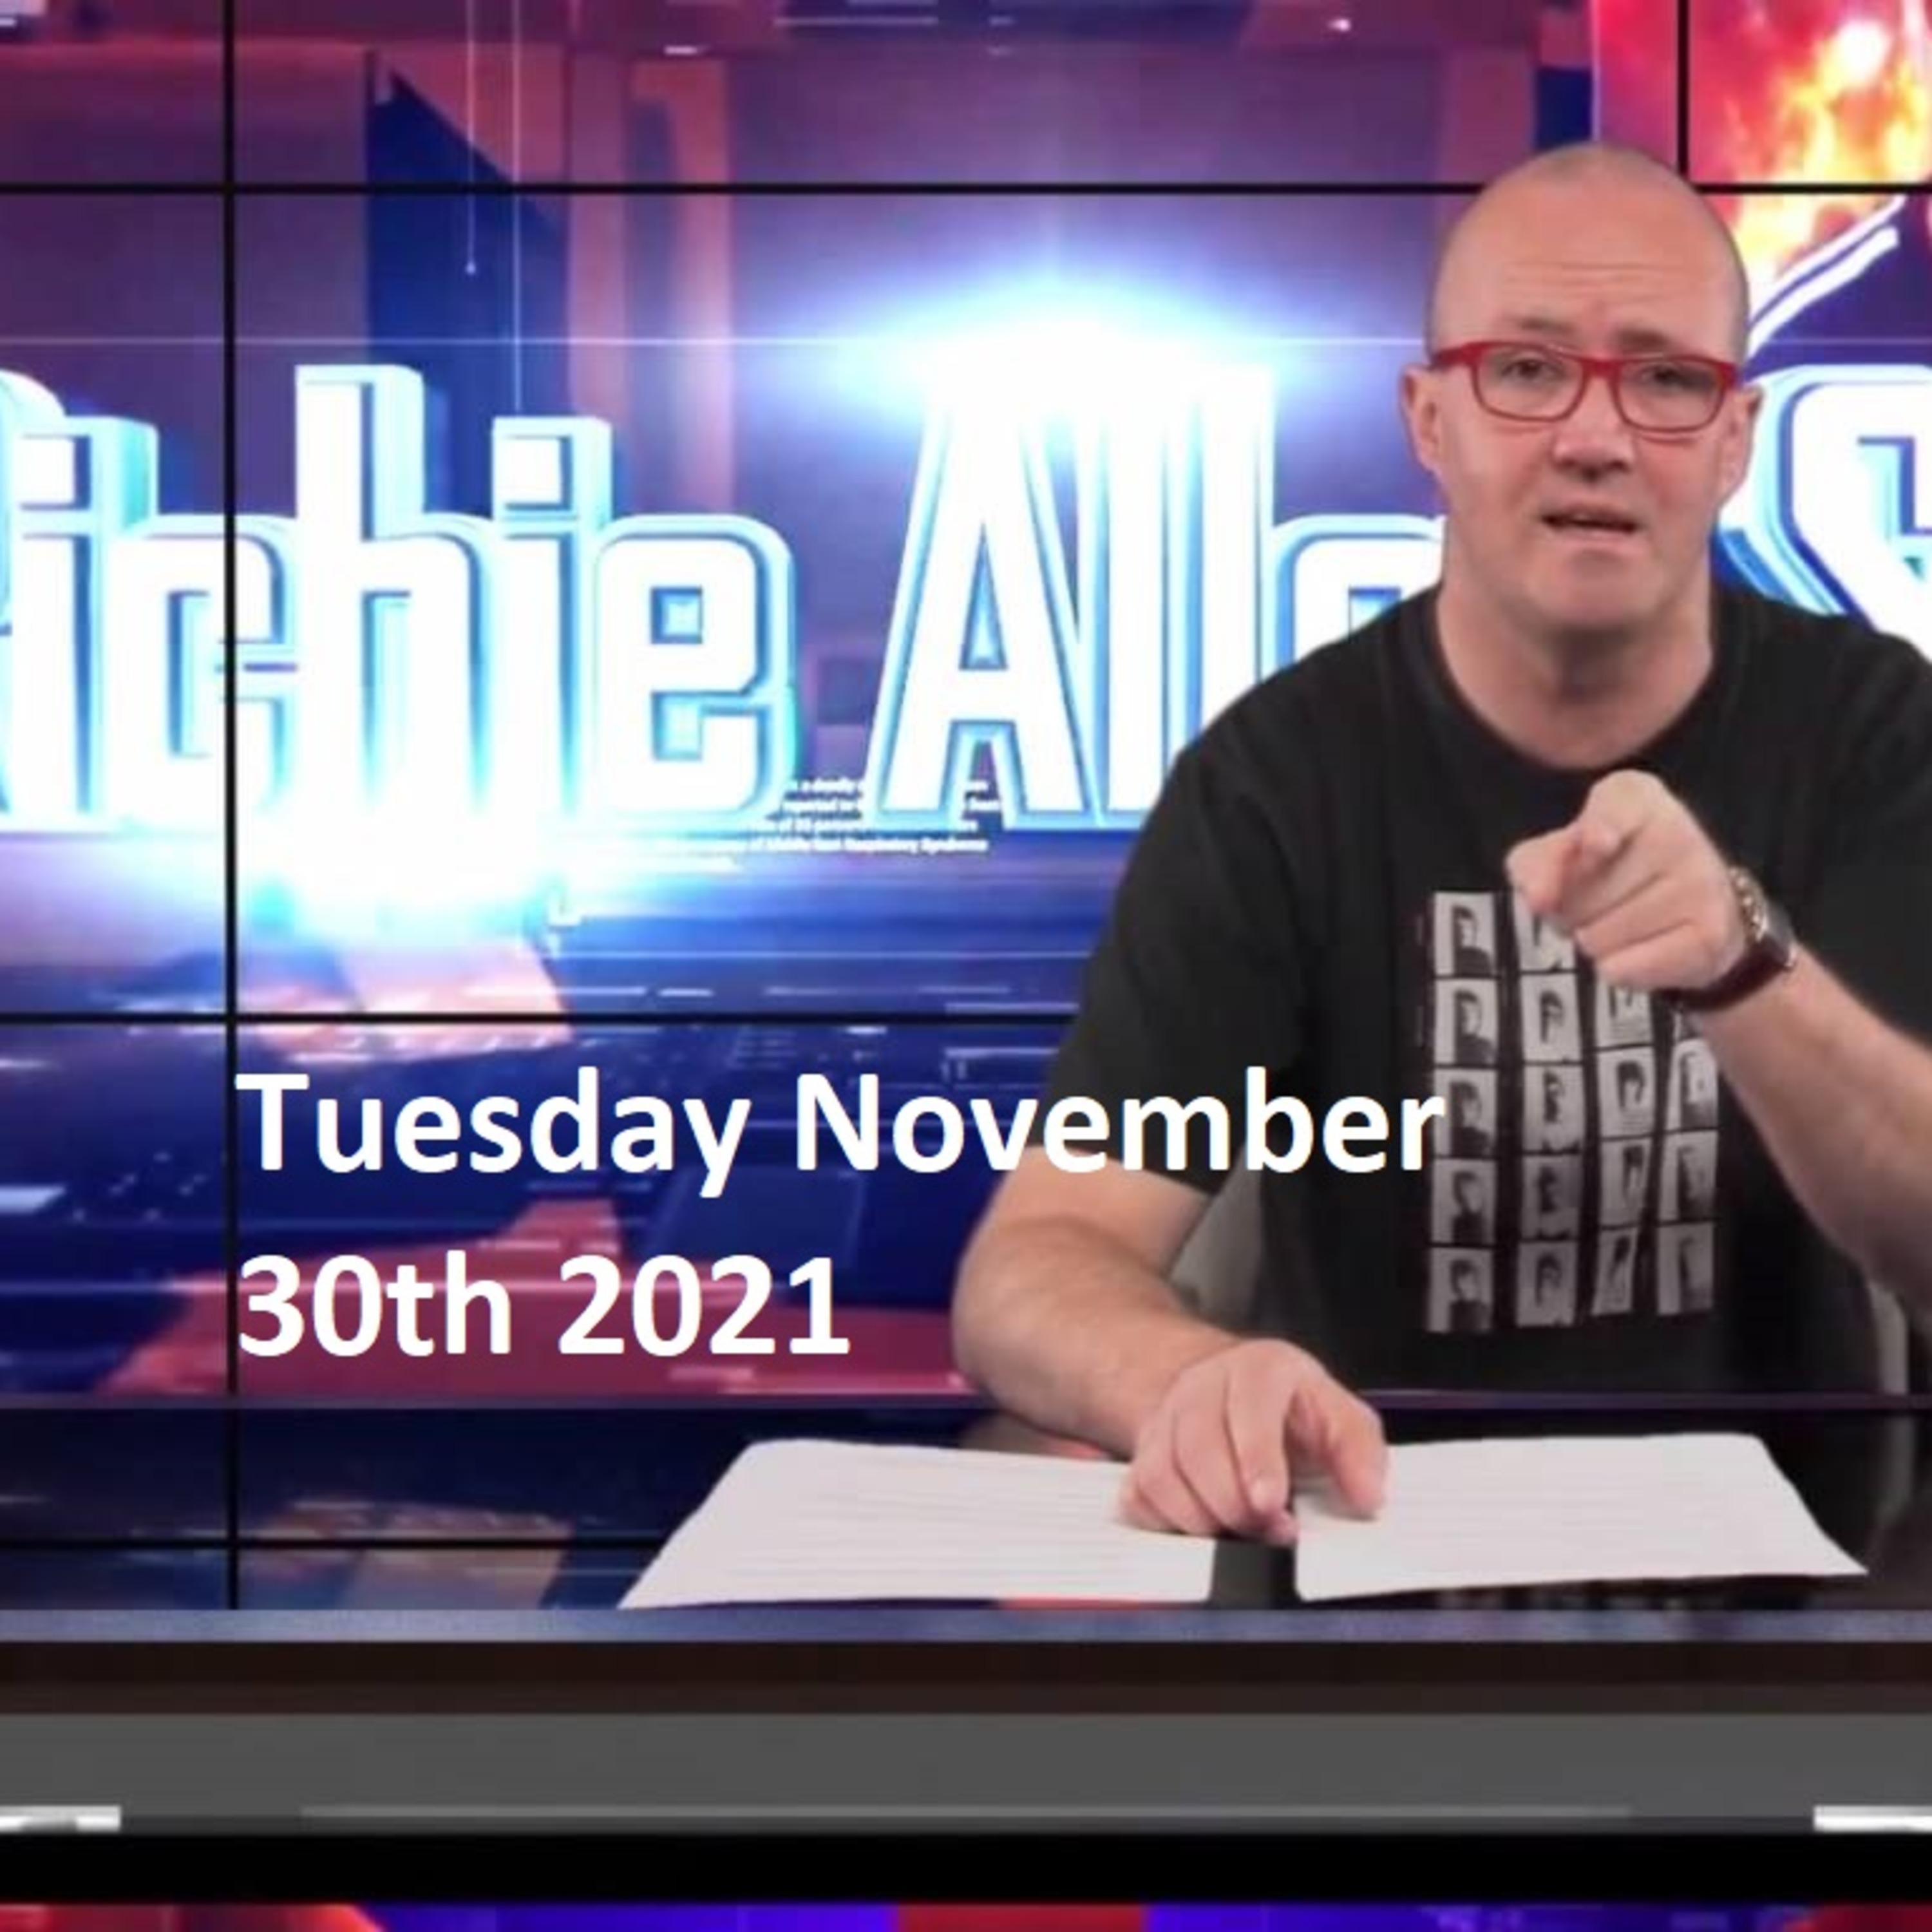 Episode 1373: The Richie Allen Show Tuesday November 30th 2021